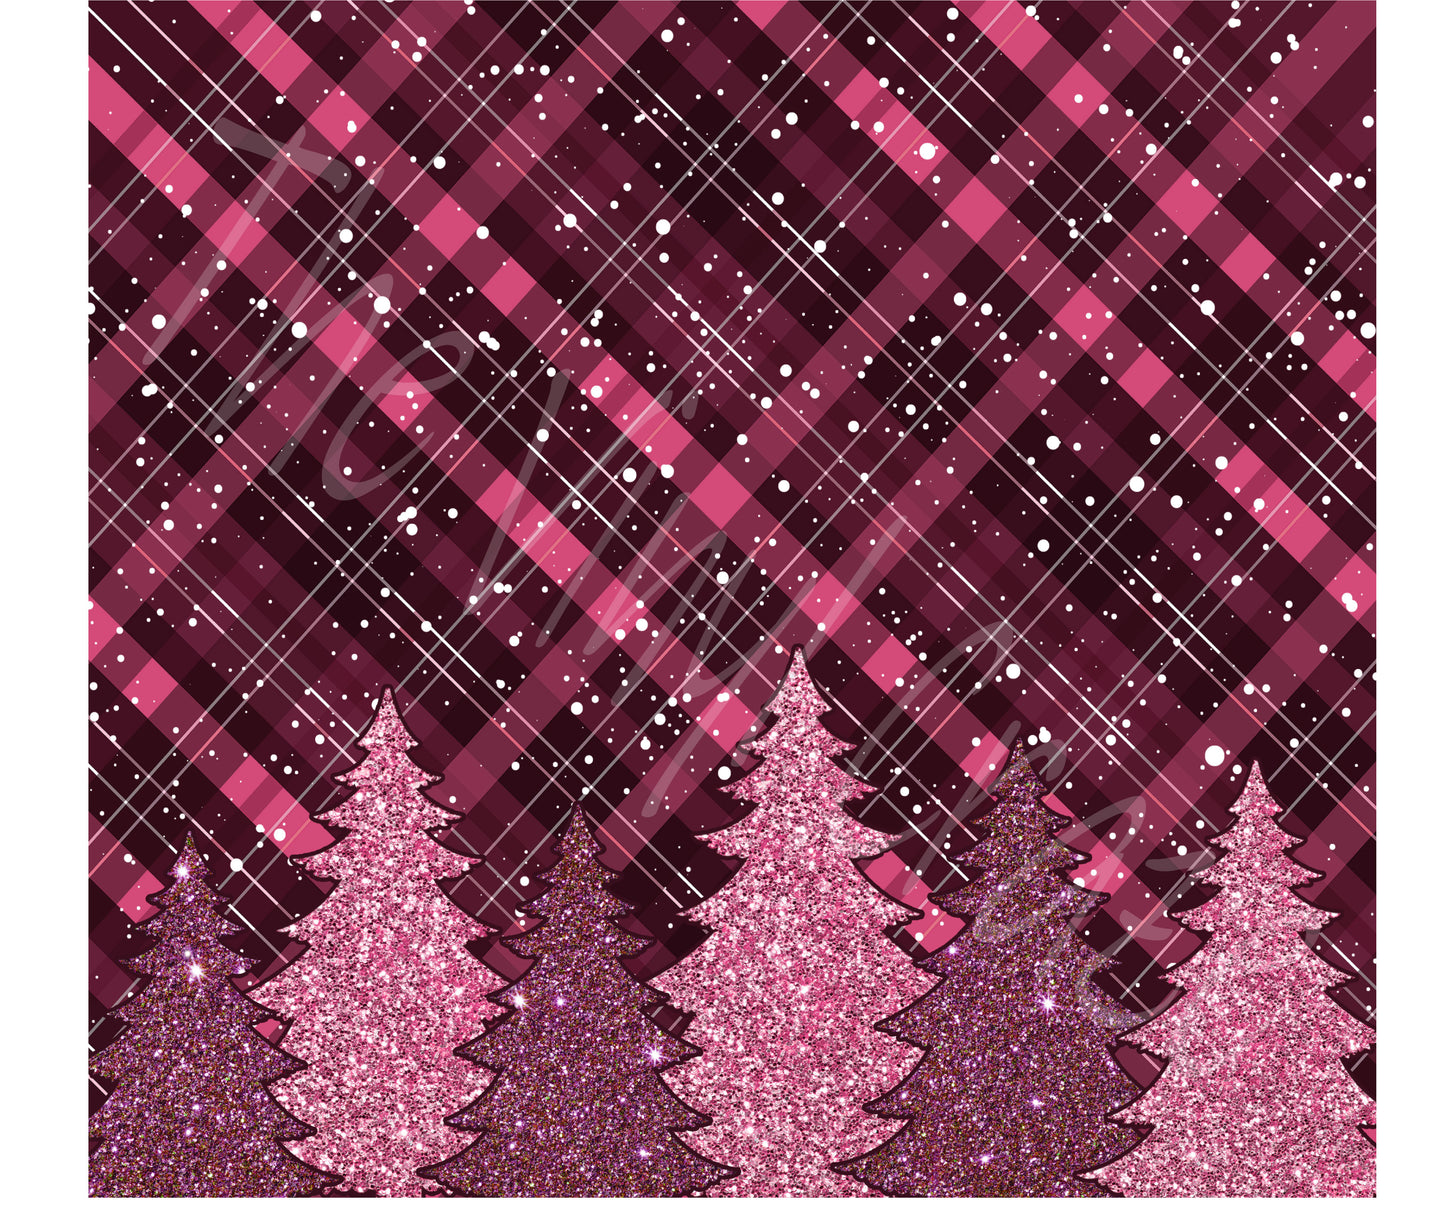 Pinkmas Christmas Wrap Collection - 15 Design Options